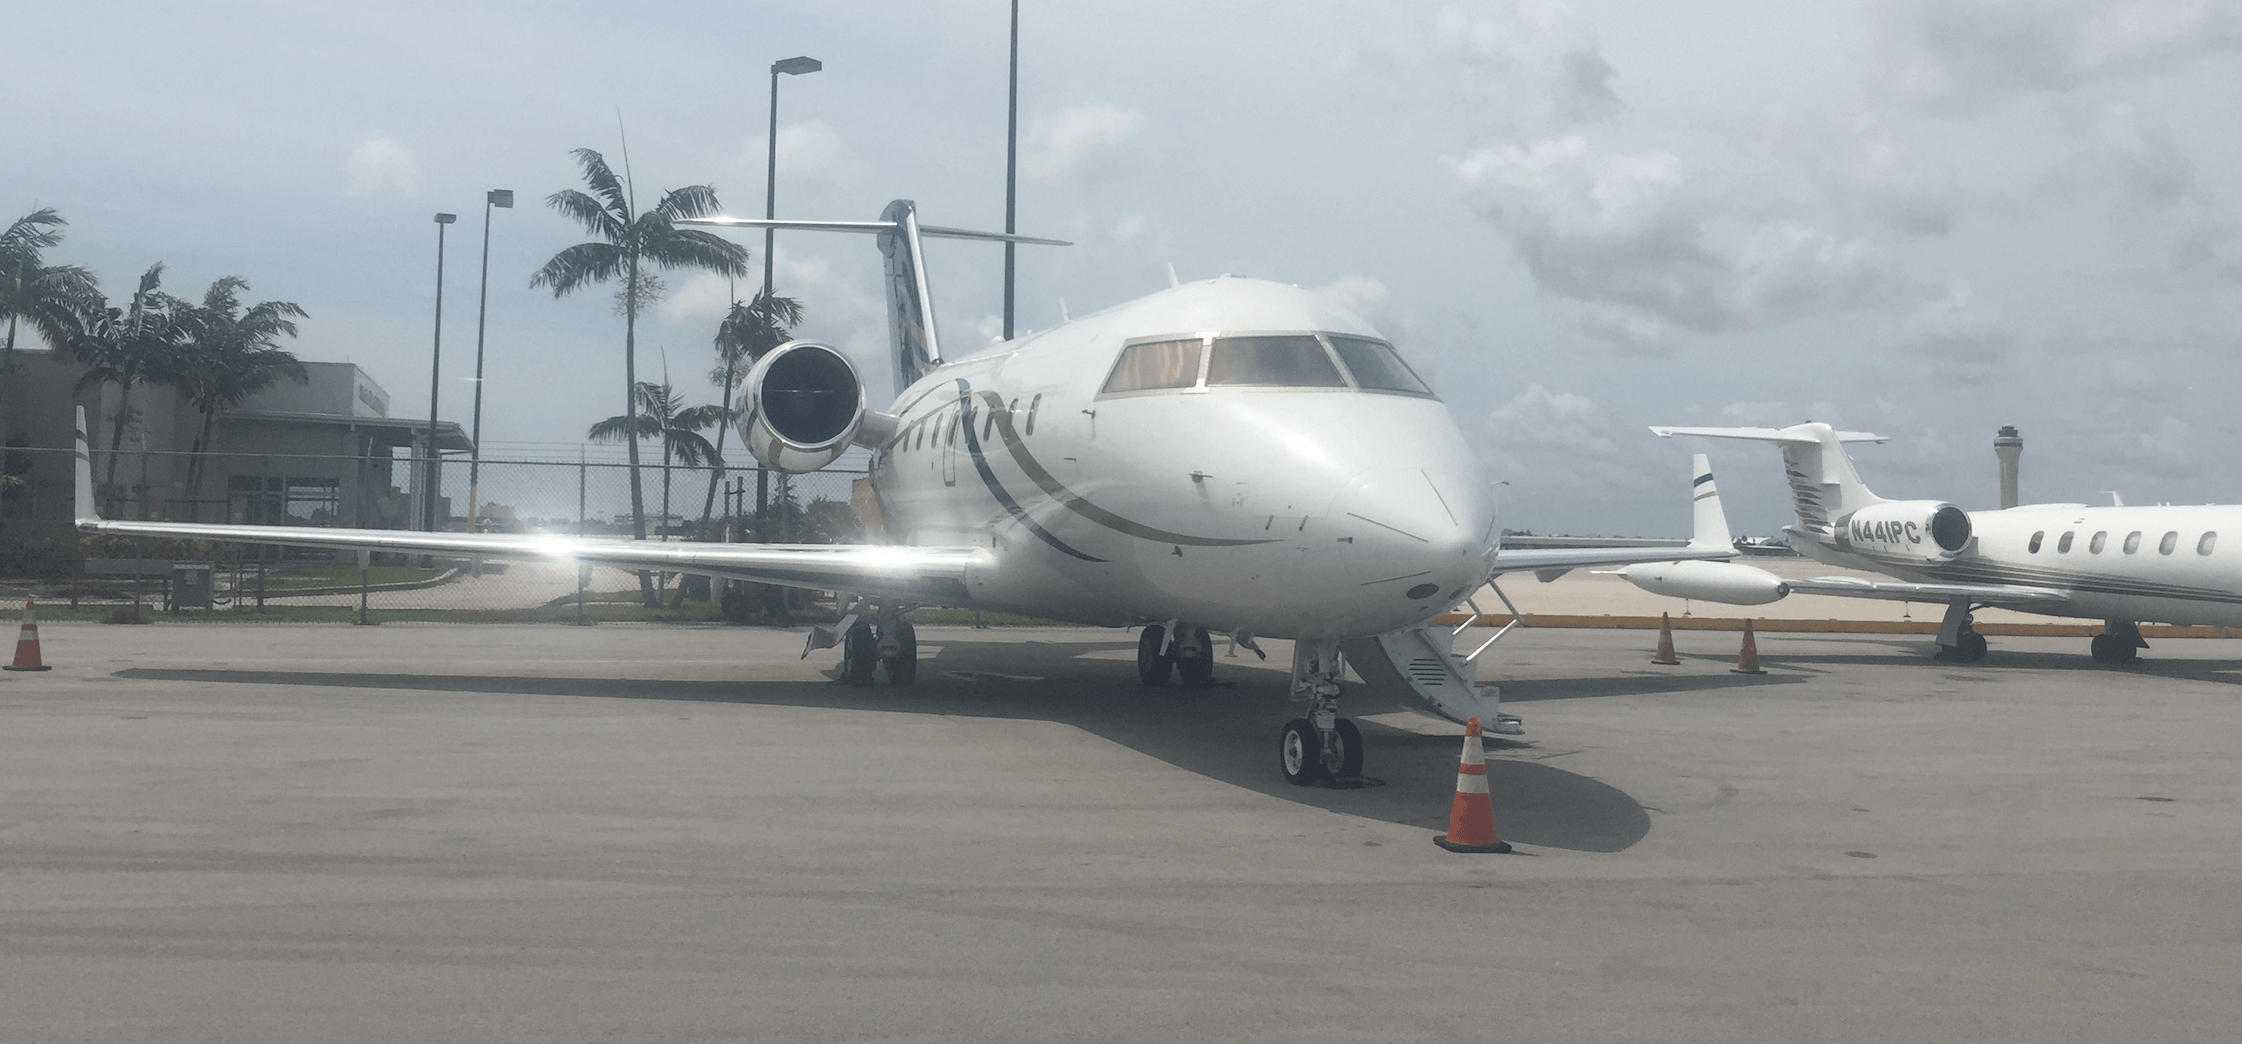 Fly 7 Executive Aviation - charter operator - charter broker